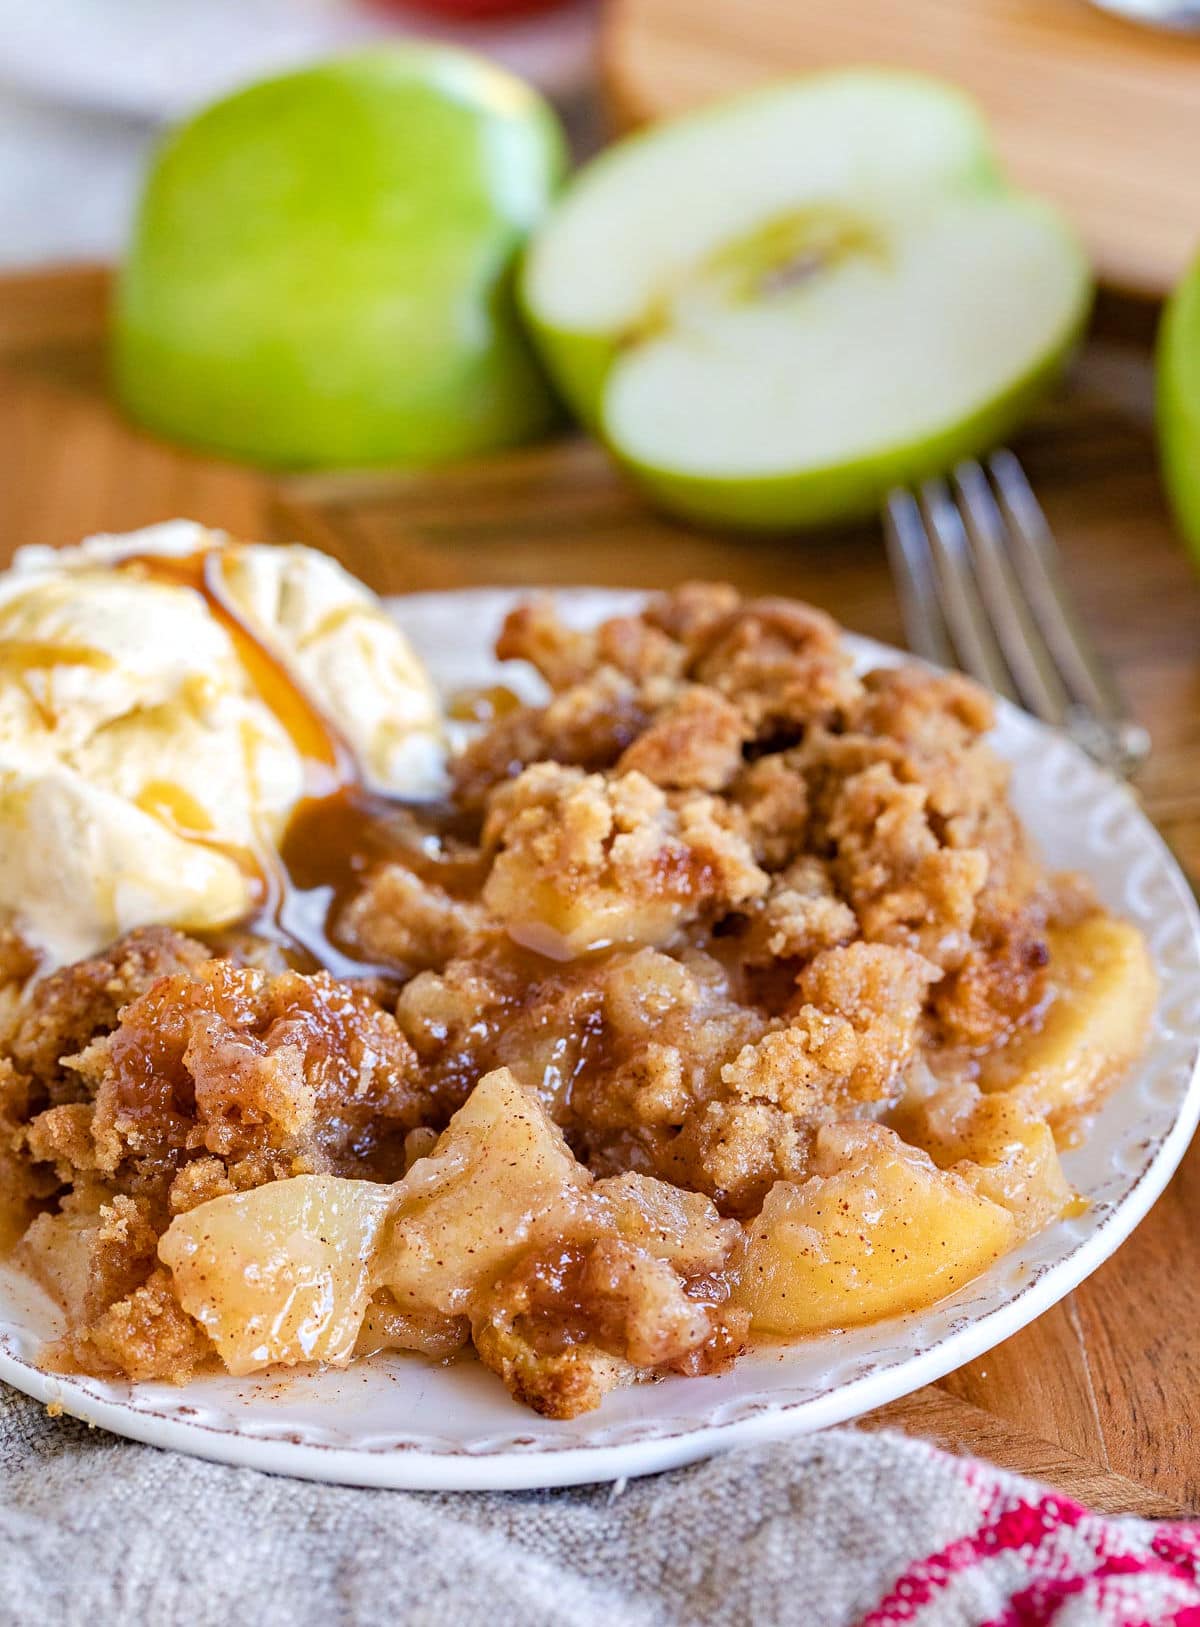 5 Best Apples for Baking (Granny Smith, Honeycrisp & More)